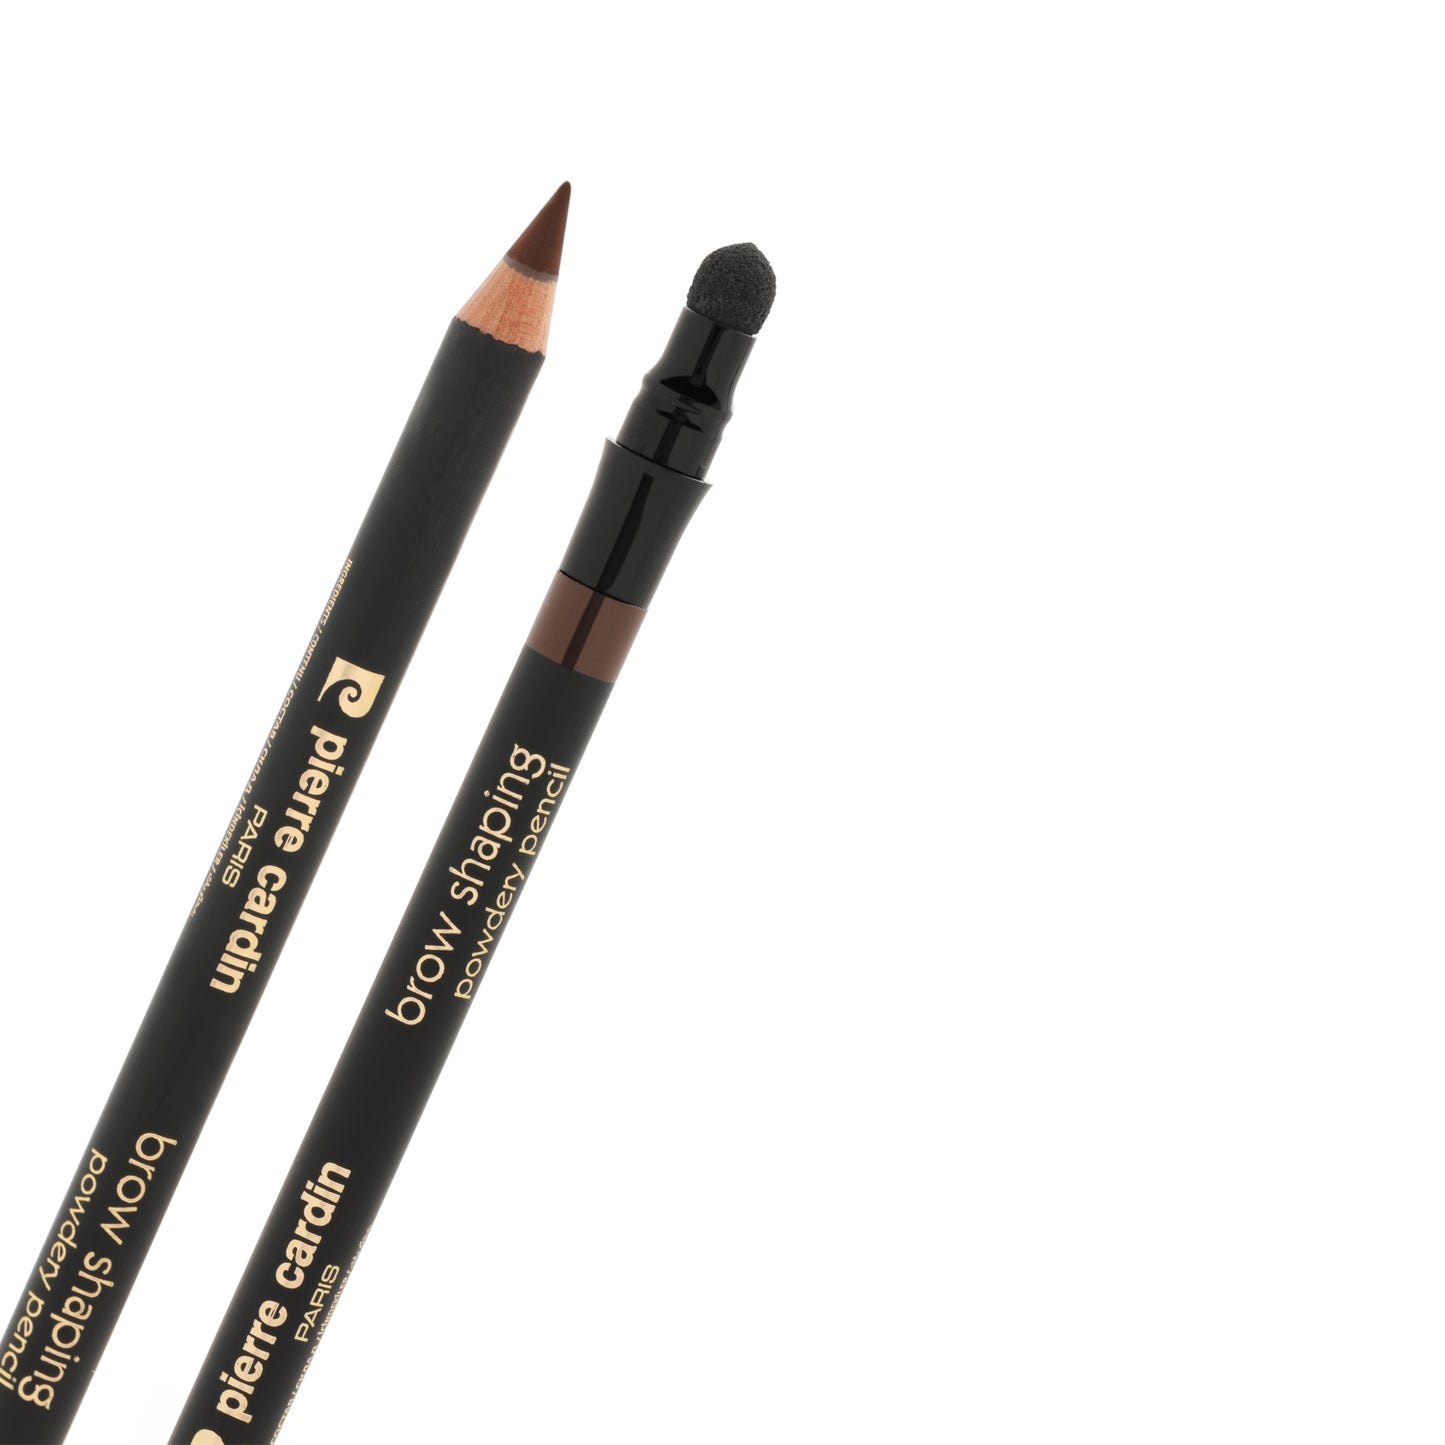 Pierre Cardin Brow Shaping Powdery Pencil  Warm Deep Brown